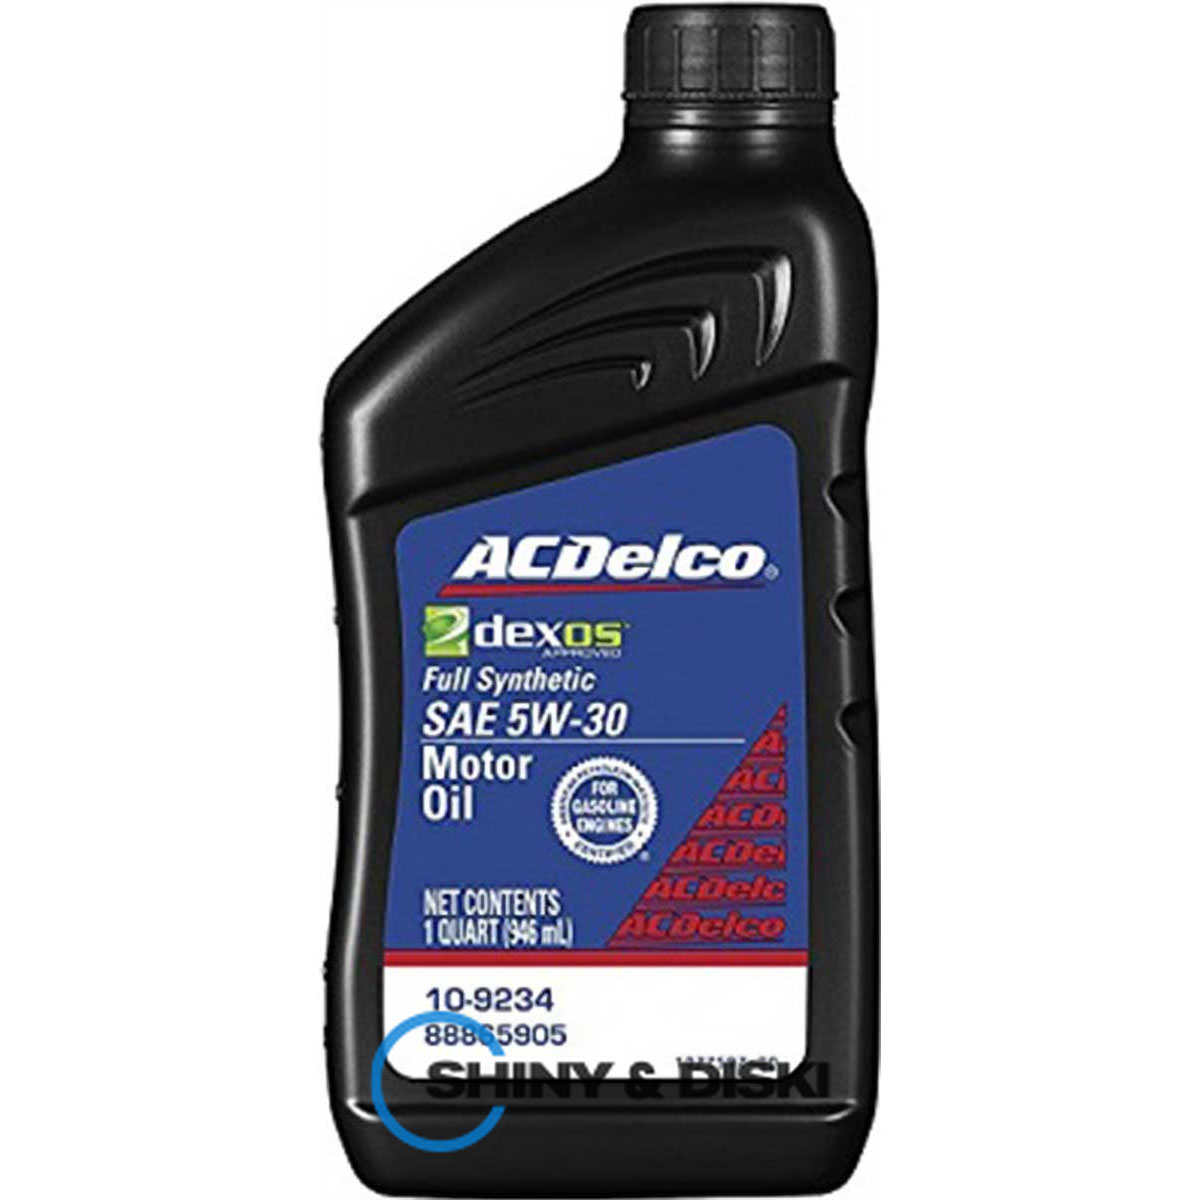 acdelco dexos1 full synthetic